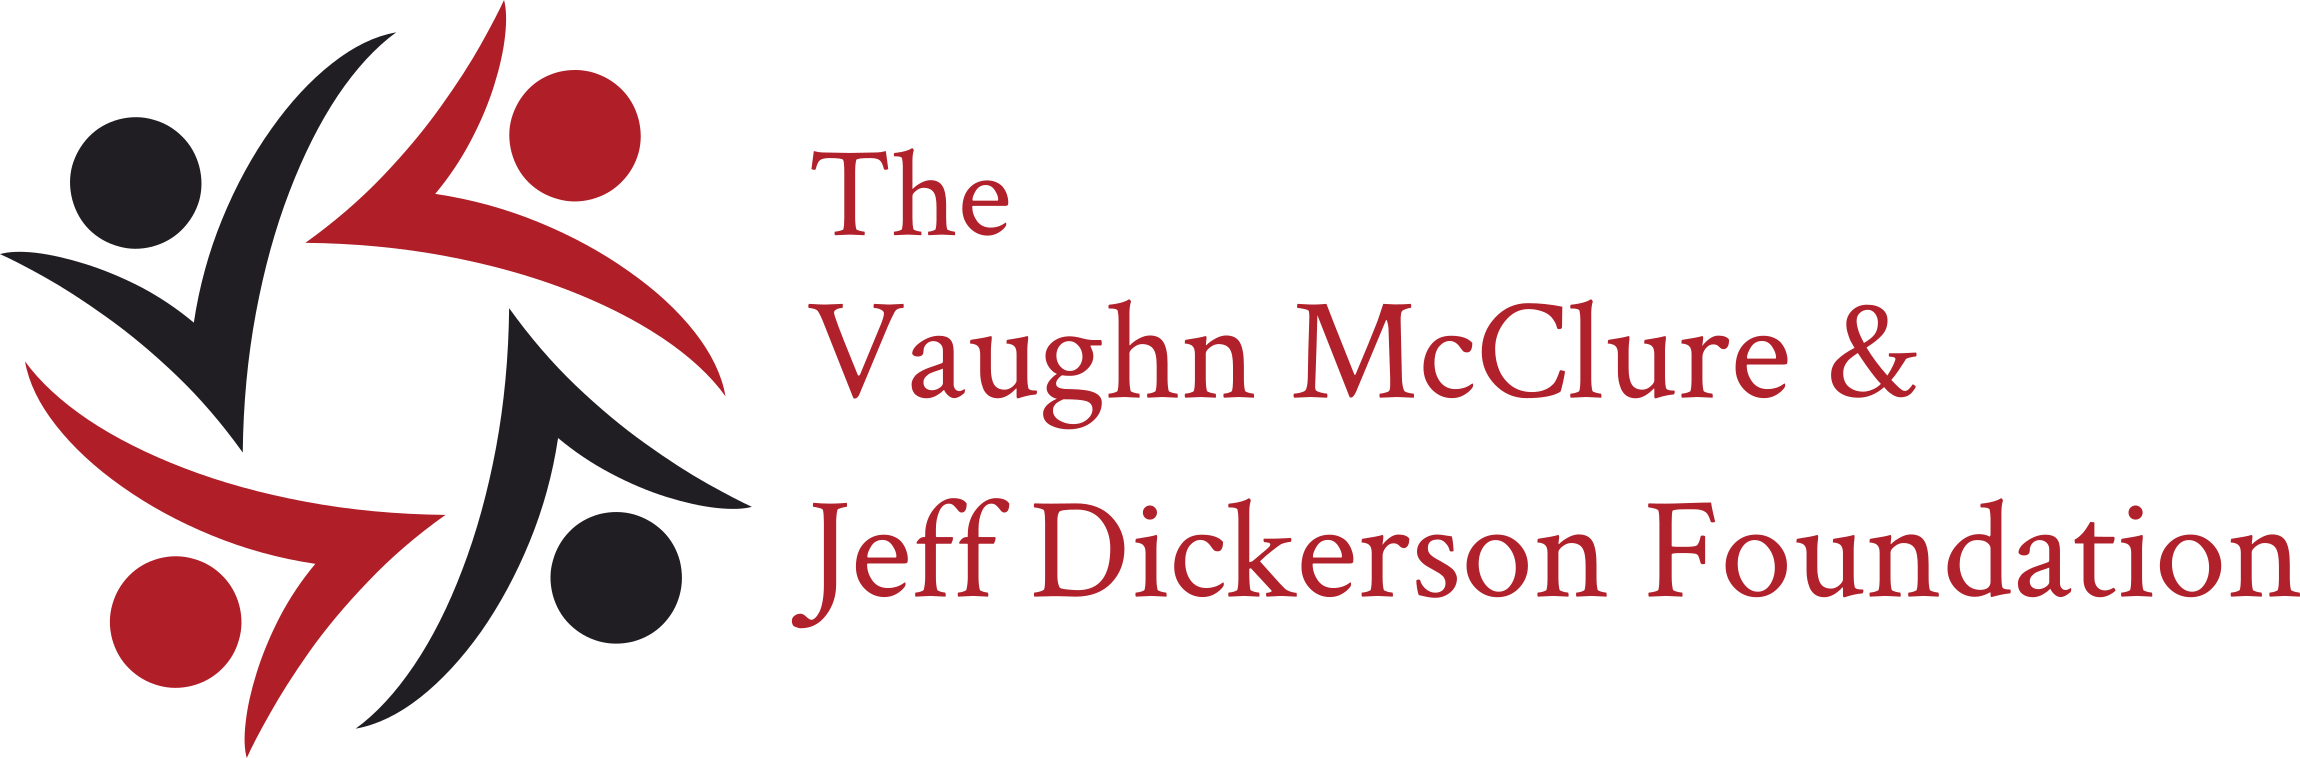 The Vaughn McClure Foundation